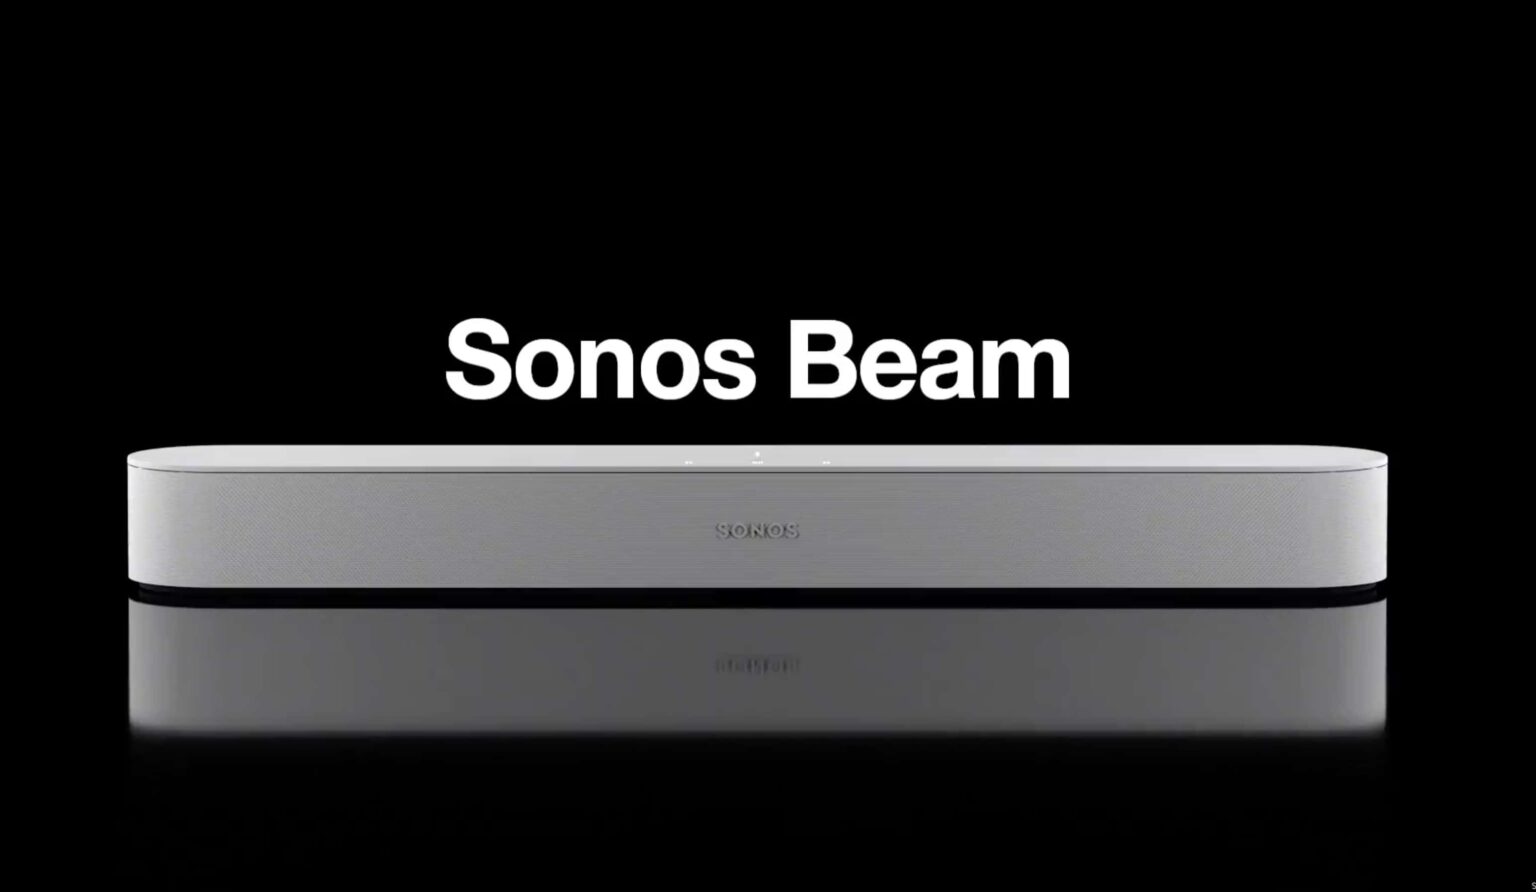 Sonos Beam soundbar - Sonos refurbished speakers and soundbars